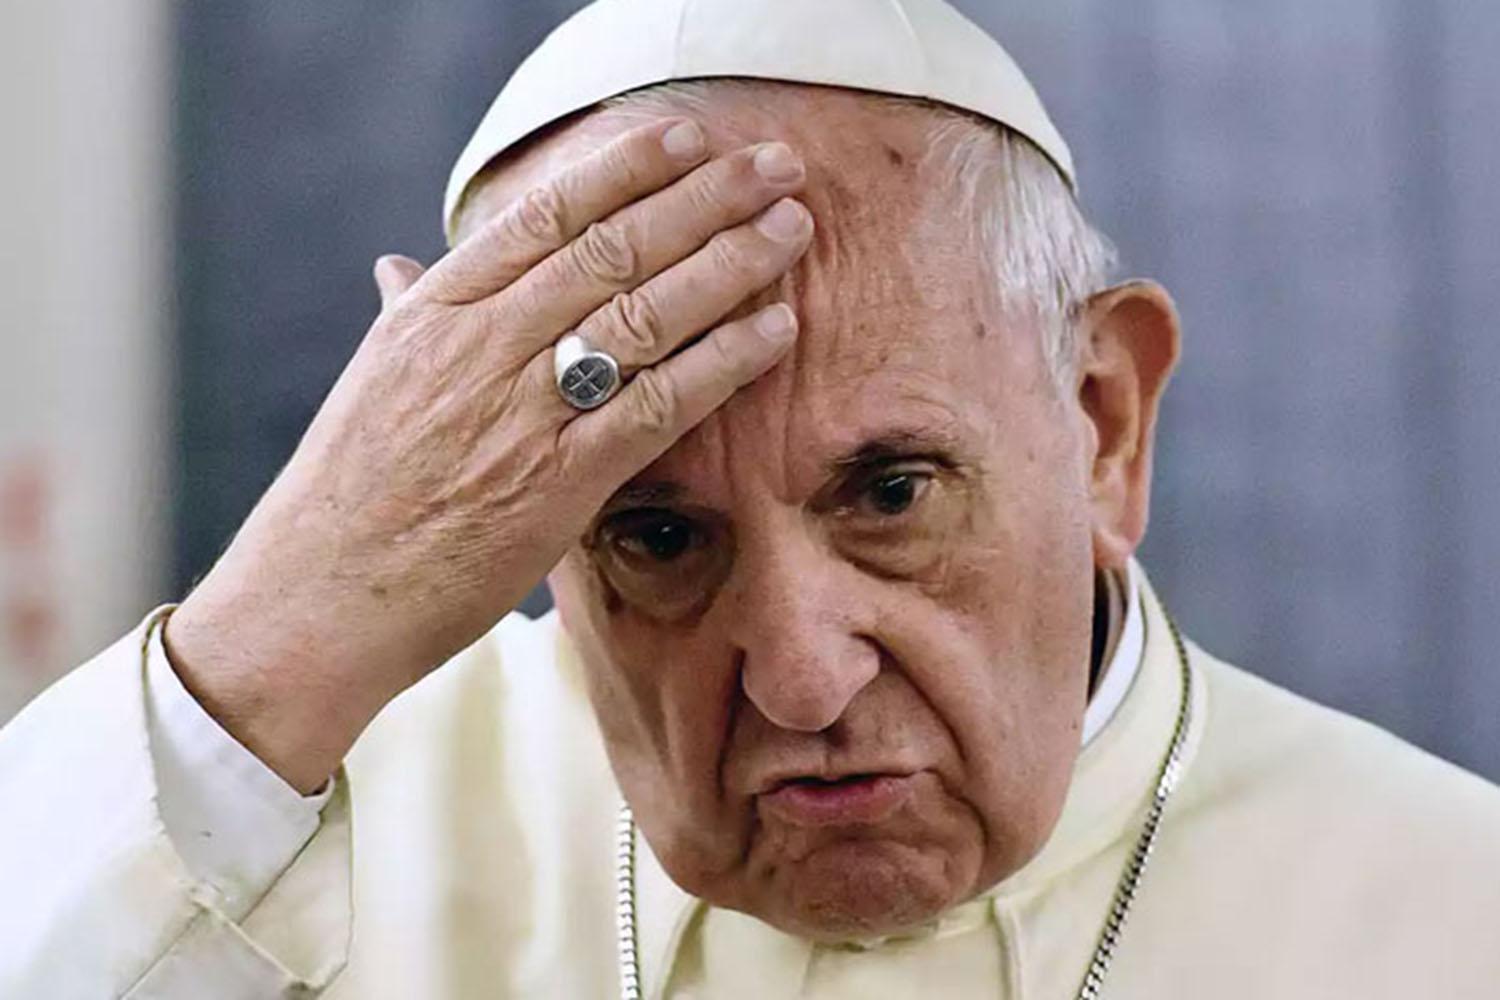 Папа римский говорит. Франциск (папа Римский). Понтифик папа Римский Франциск. Франциск (папа Римский) фото.